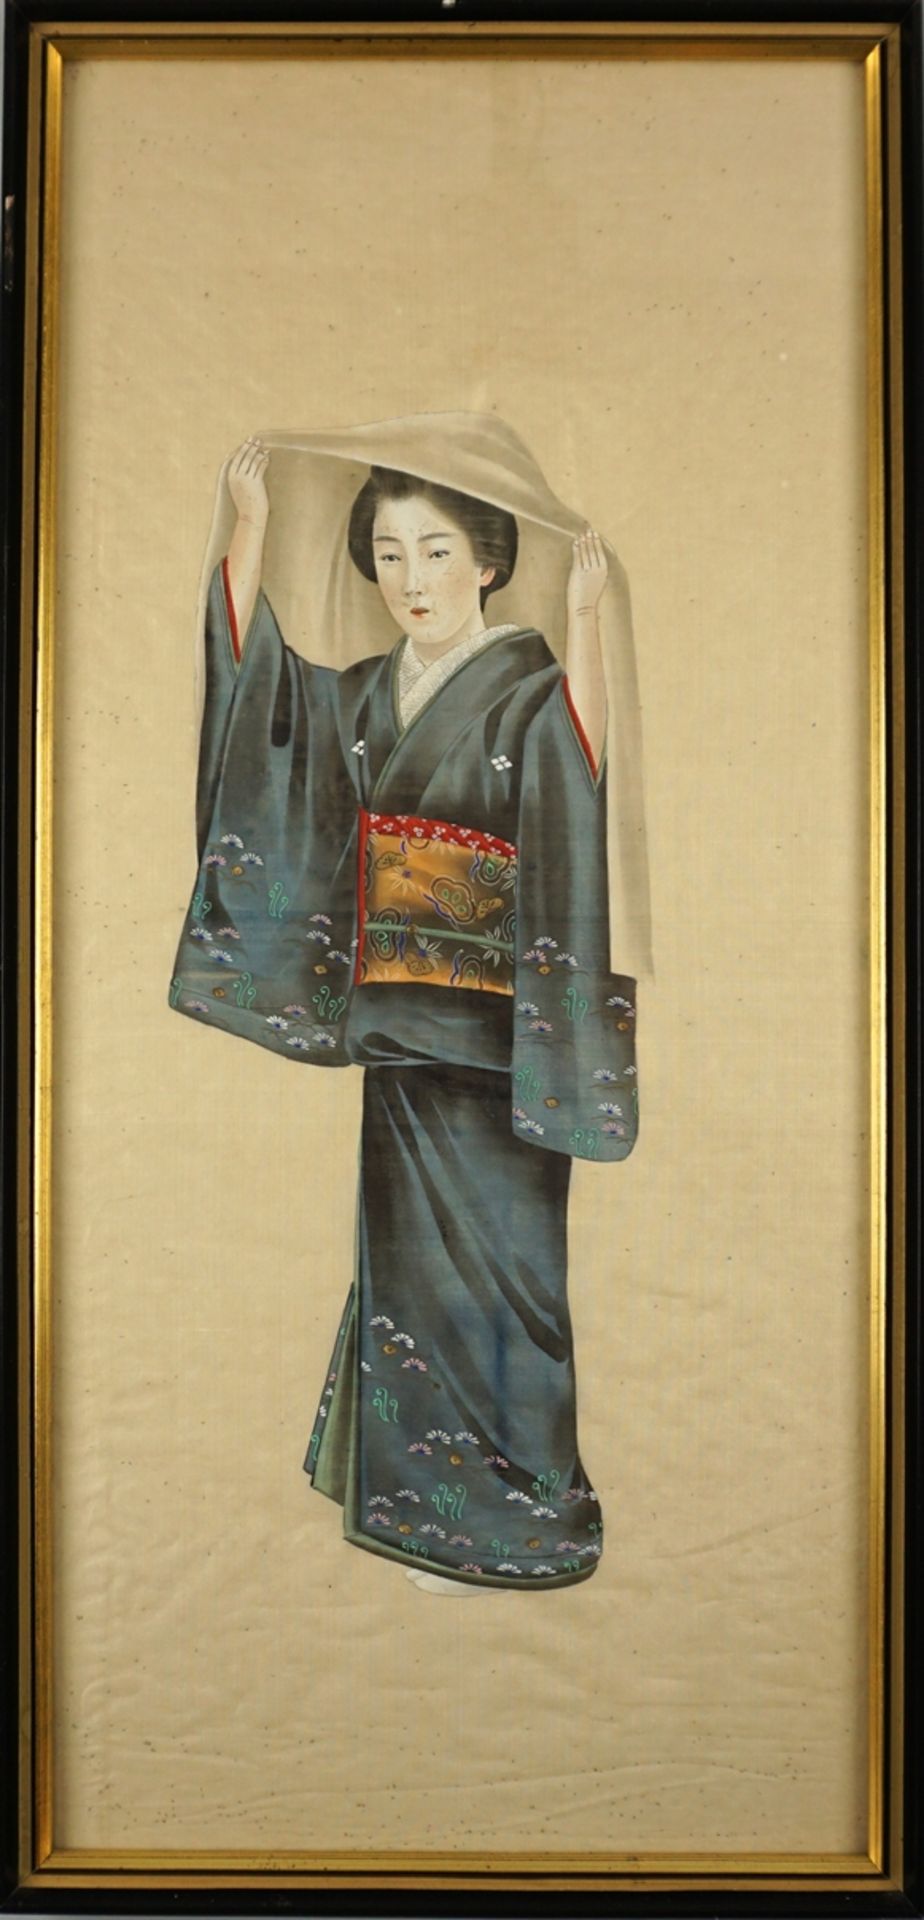 4 japanische Seidenmalereien mit Geisha-Motiven, Meiji, spätes 19.Jh. - Image 4 of 7